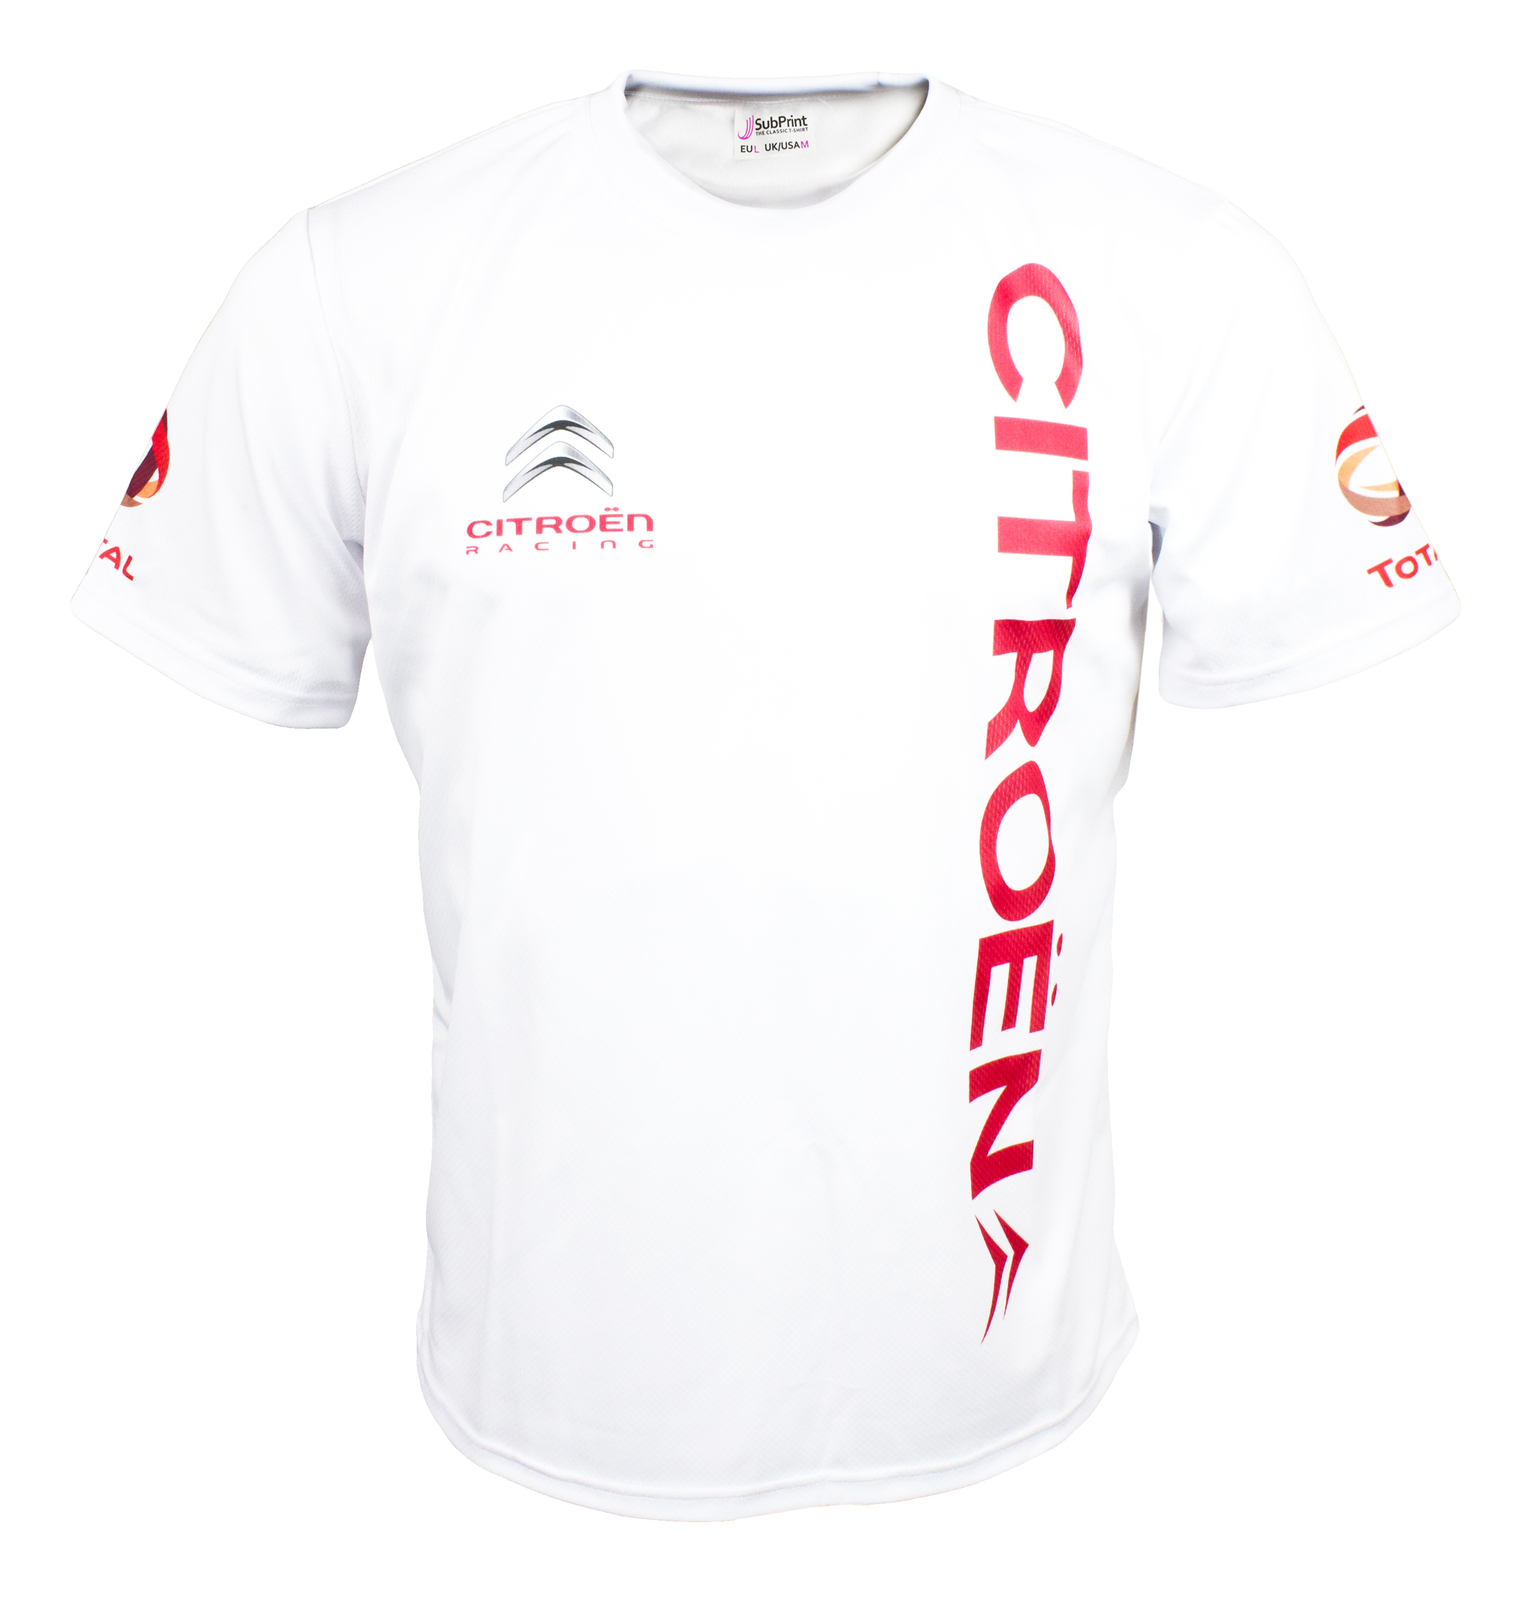 Citroen White Fan T-Shirt Motorsports Car Racing Sports Top Gift New Fashion